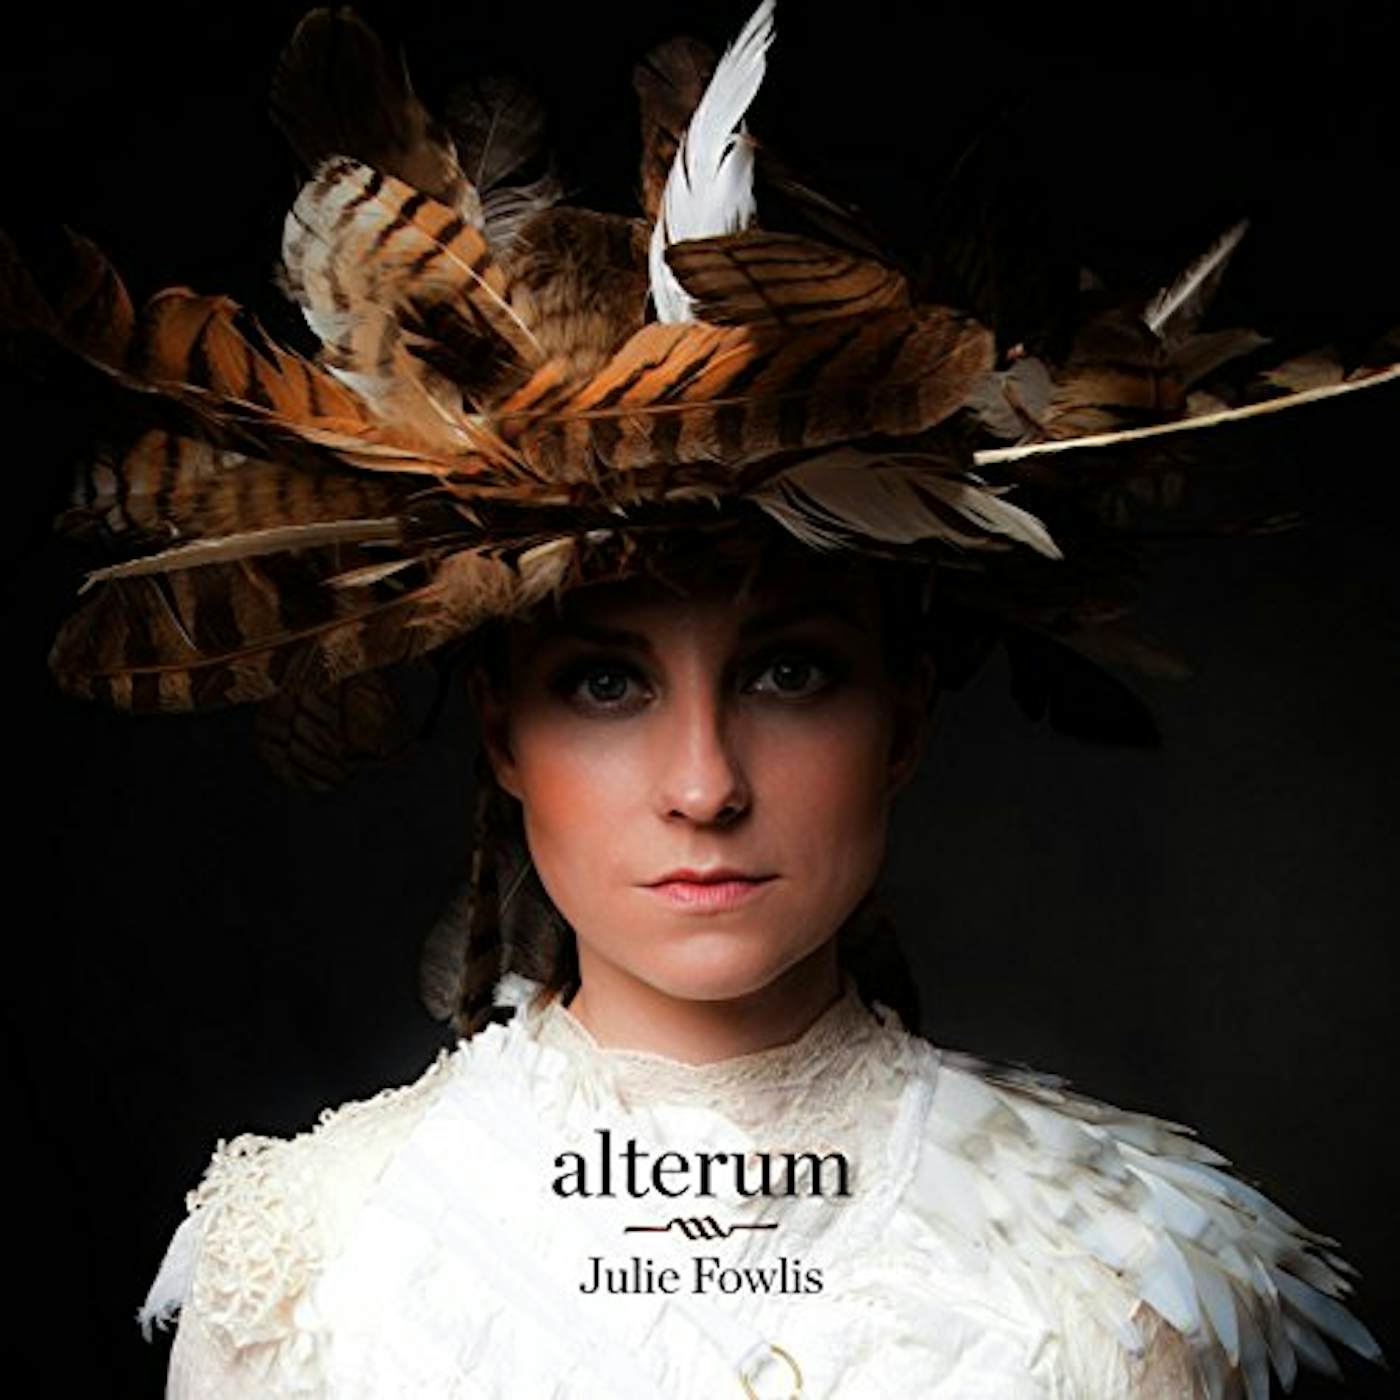 Julie Fowlis alterum Vinyl Record